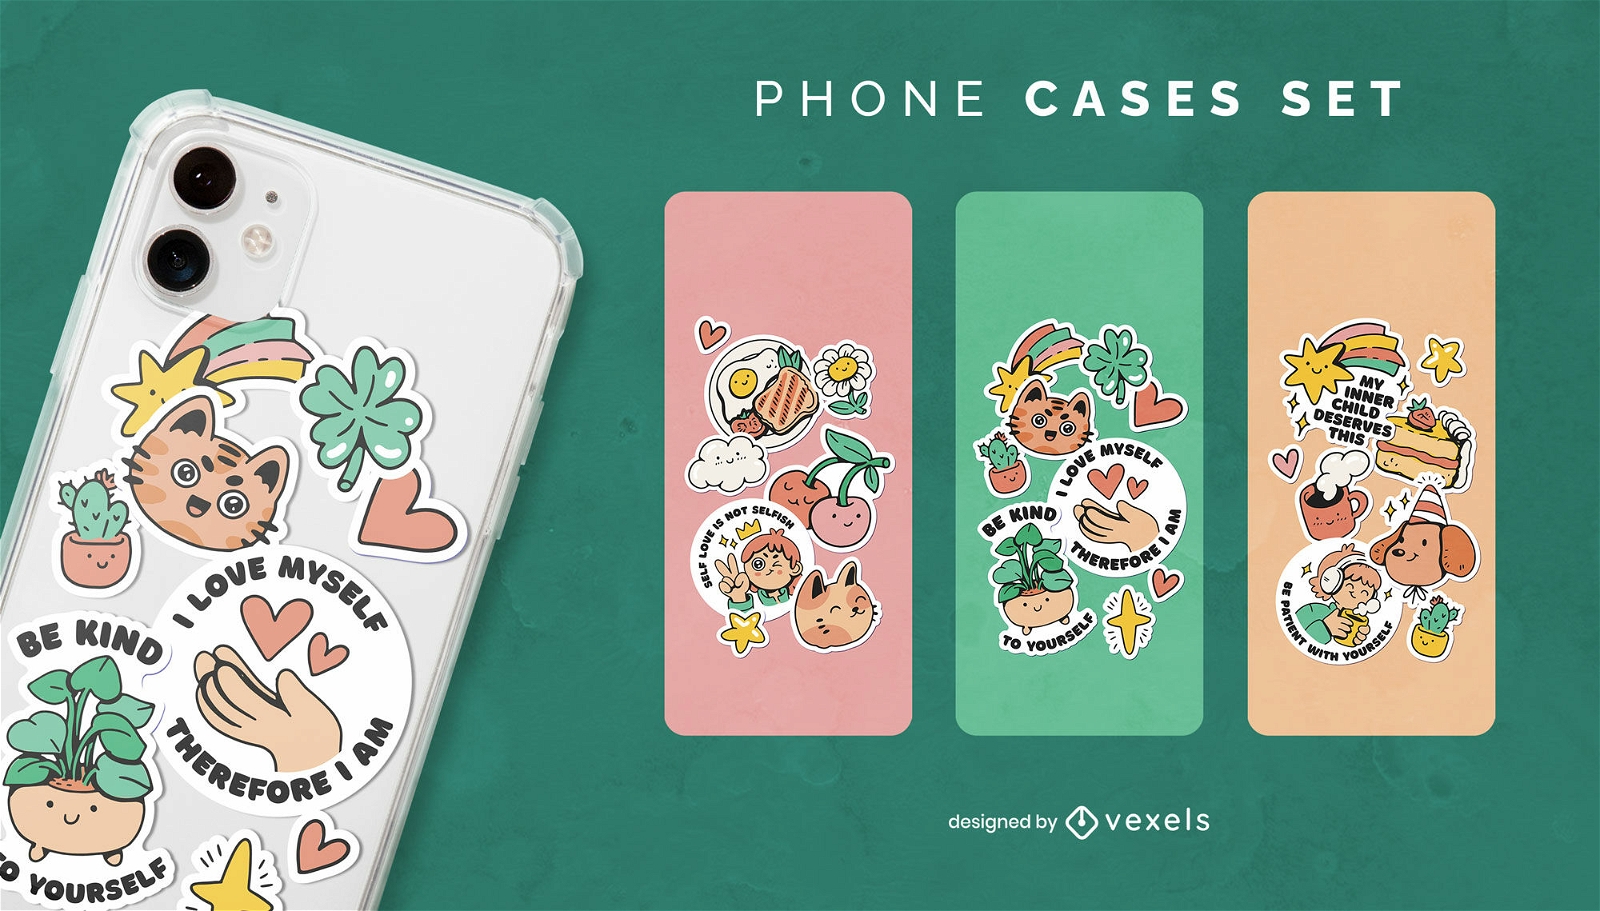 Self love stickers phone cases set